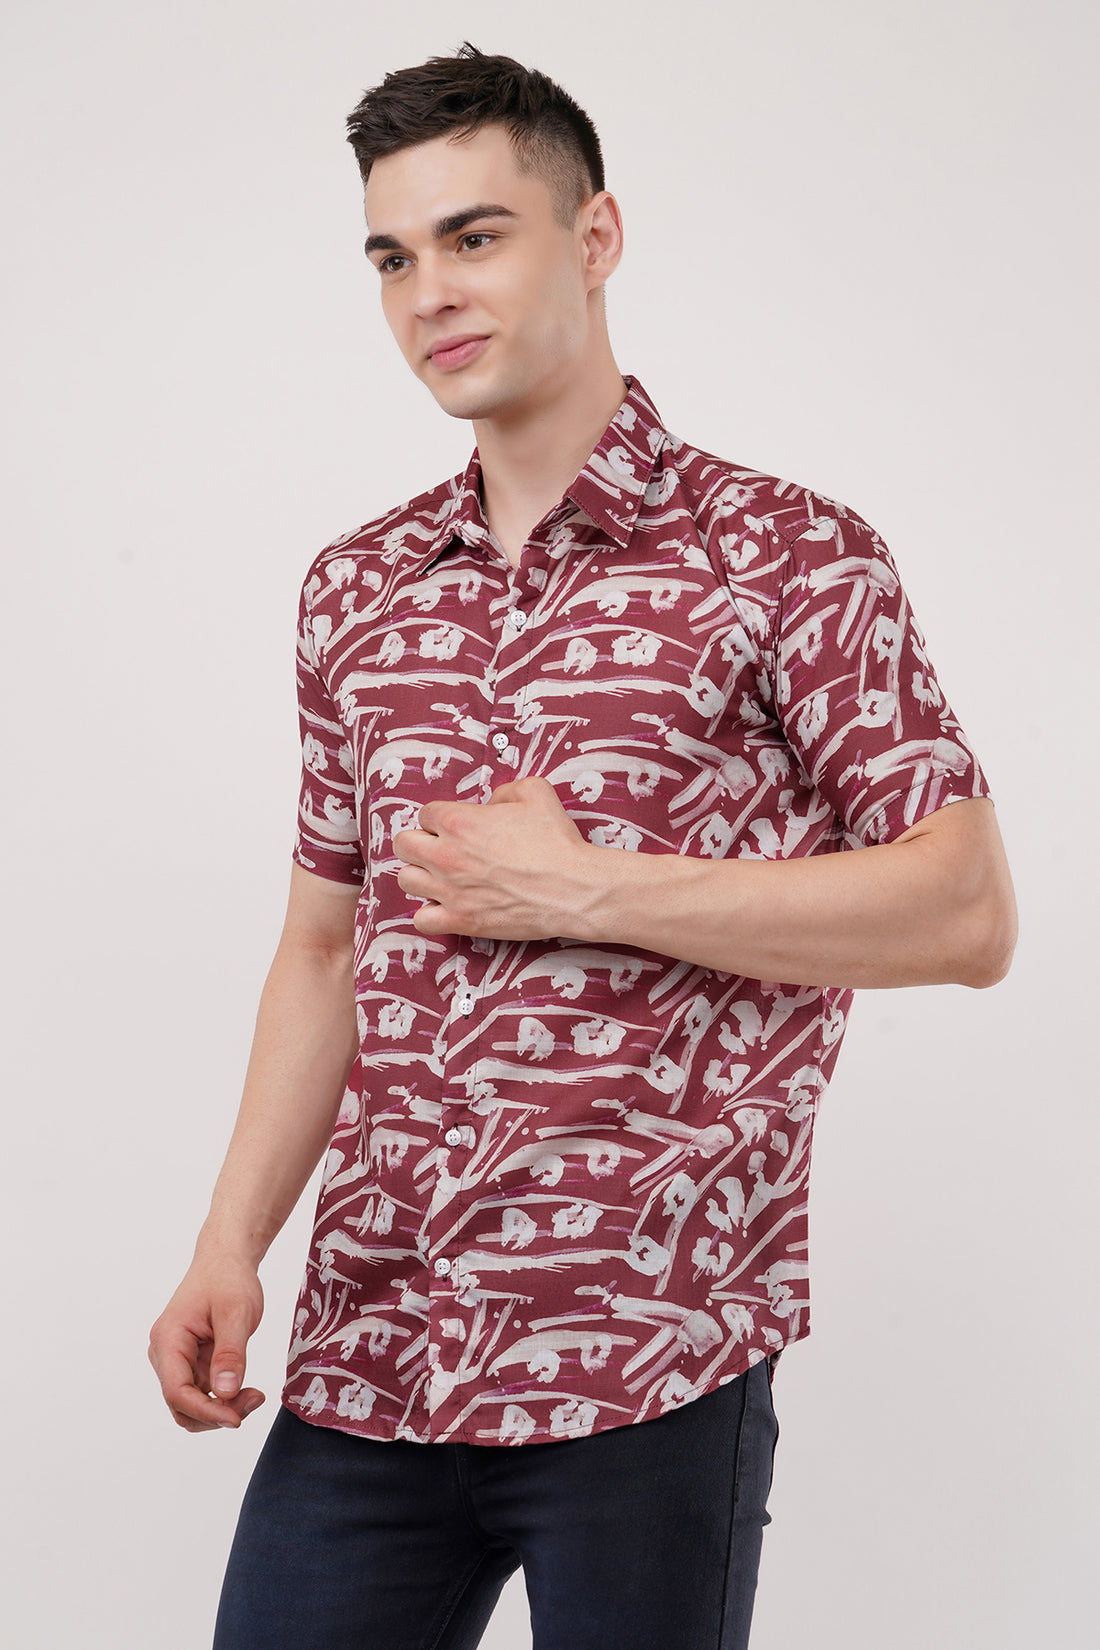 Half Sleeve Cuban Collar Printed Summer Men's Shirts by ColourJoyLondon Available in 11 Designs